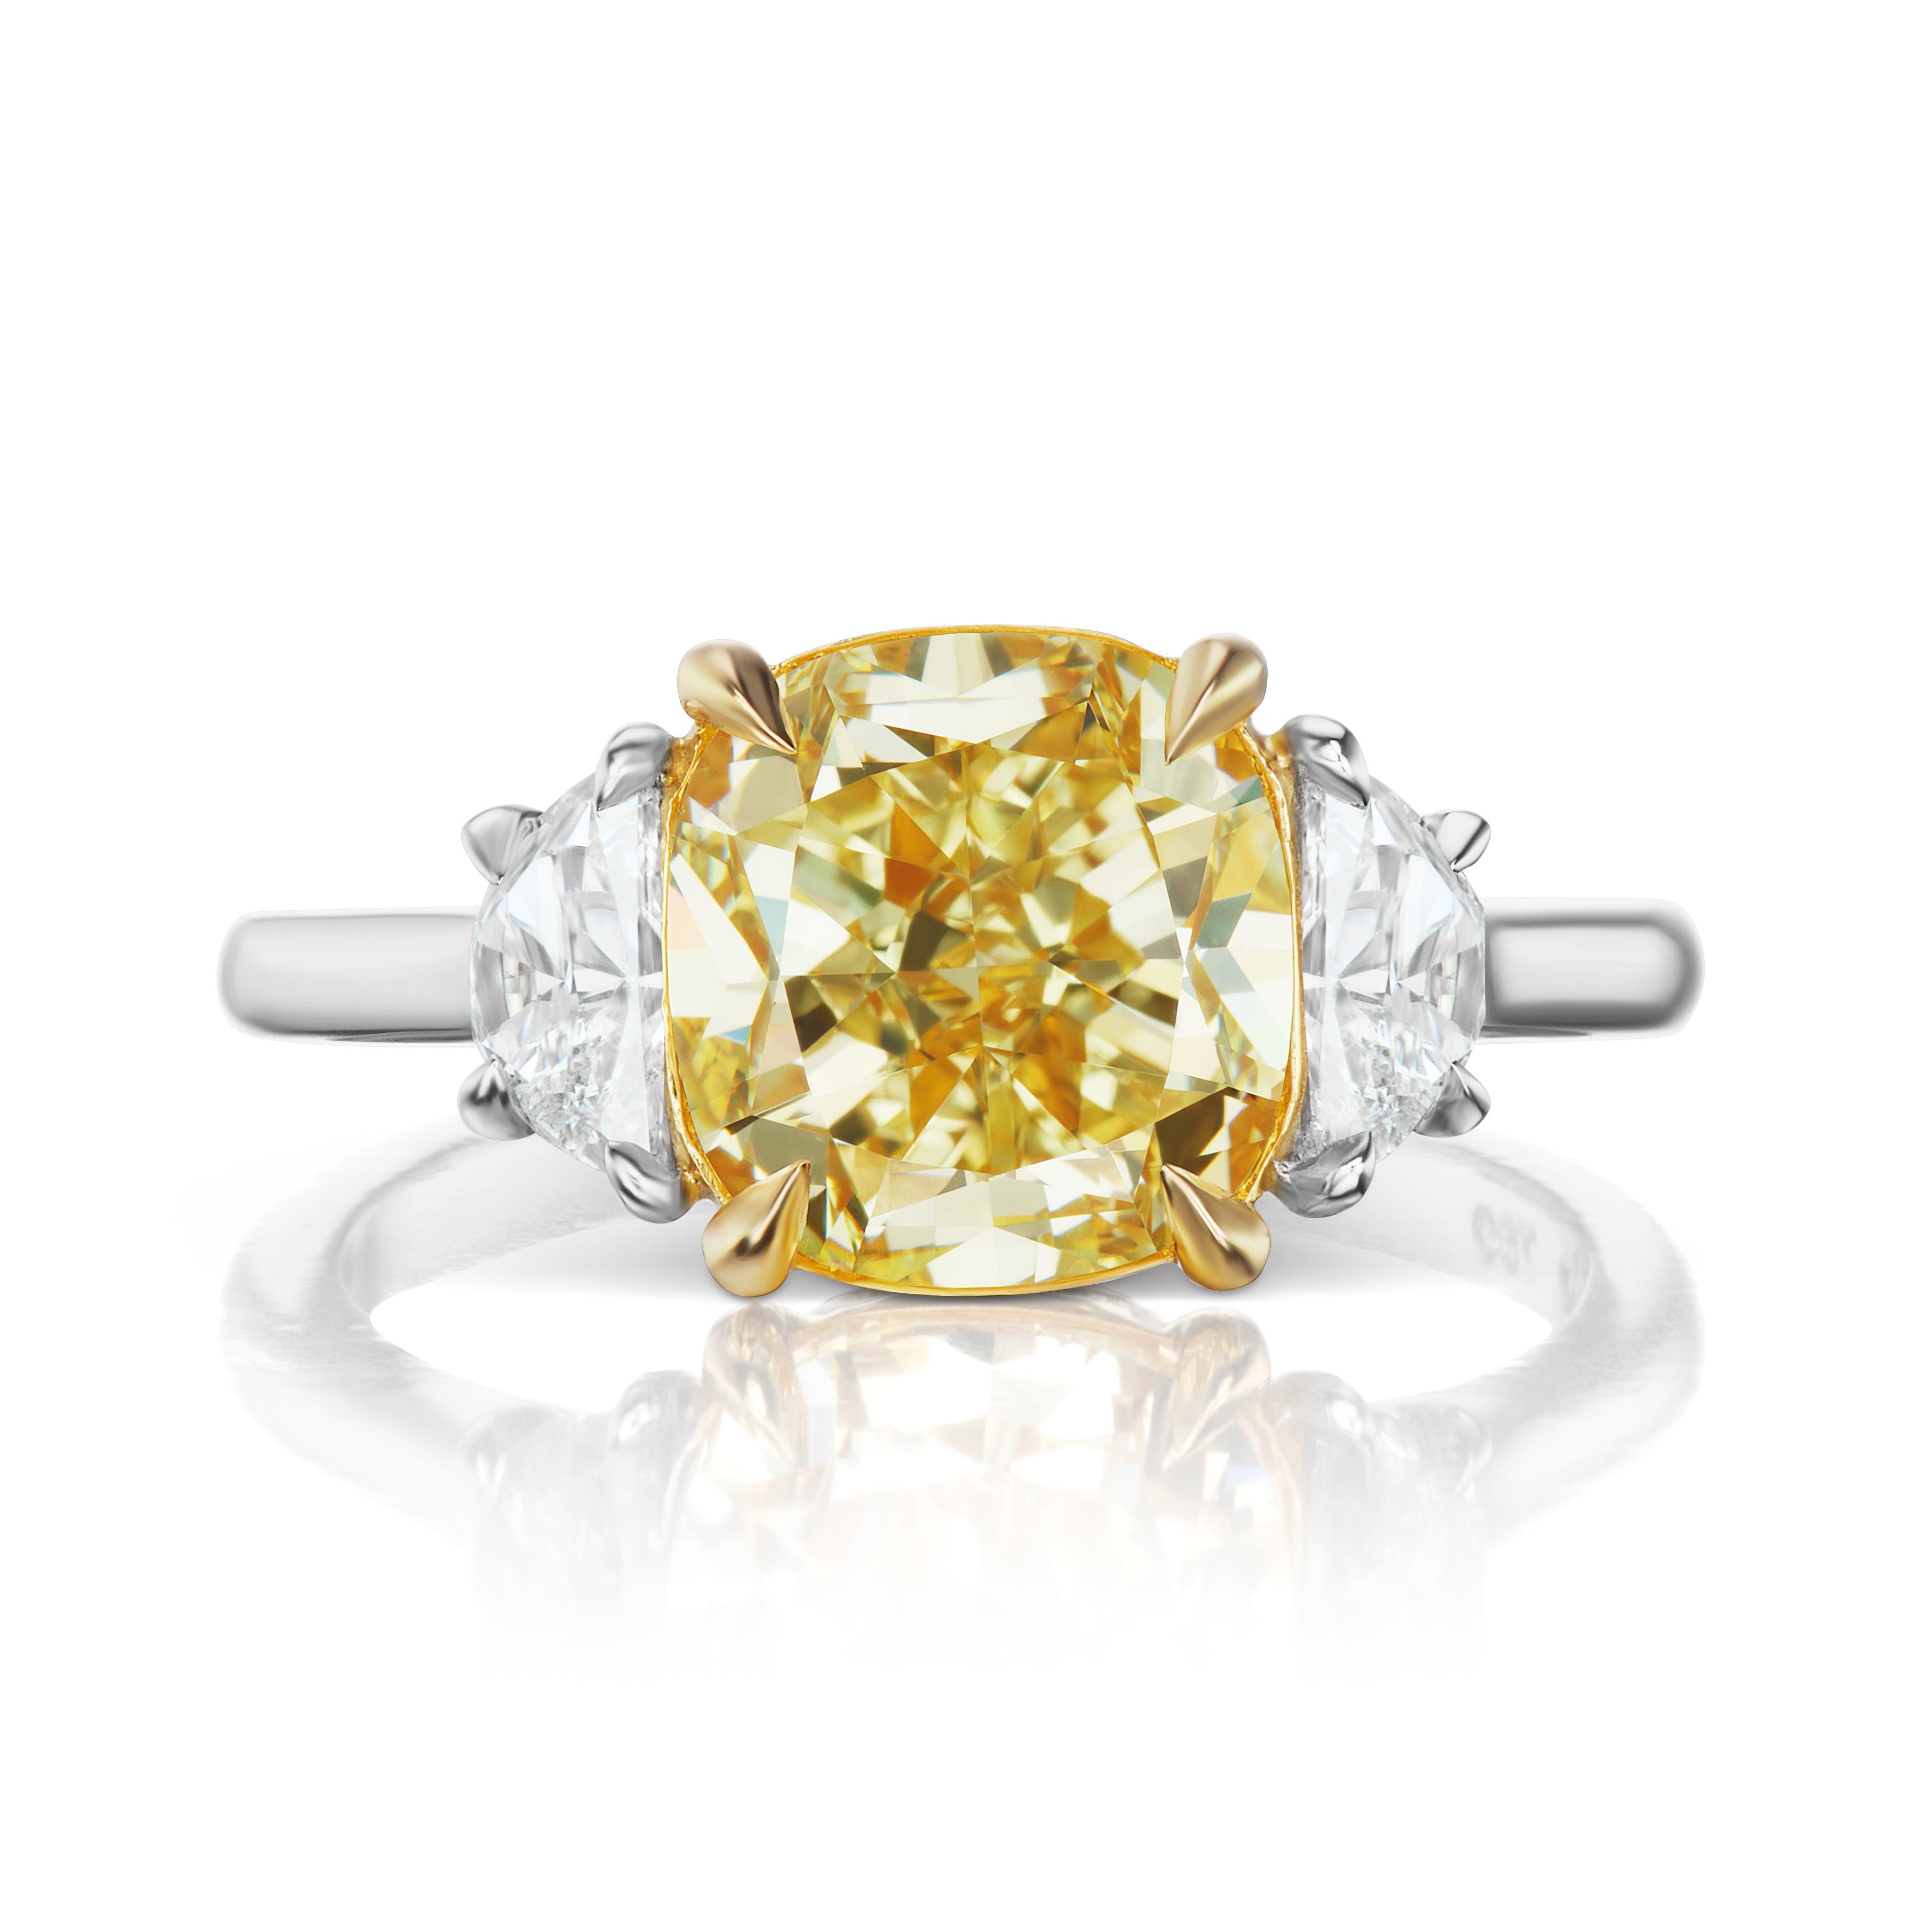 JOANA LIGHT YELLOW DIAMOND ENGAGEMENT PLATINUM & 18K WHITE GOLD RING BY MIKE NEKTA
GIA CERTIFIED

Center Diamond:
Carat Weight: 4 Carats
Color: LIGHT YELLOW
Style:  CUSHION BRILLIANT
Measurement:  8.8 x 8.4 x 6.0 mm.

Ring:
Metal: PLATINUM & 18K